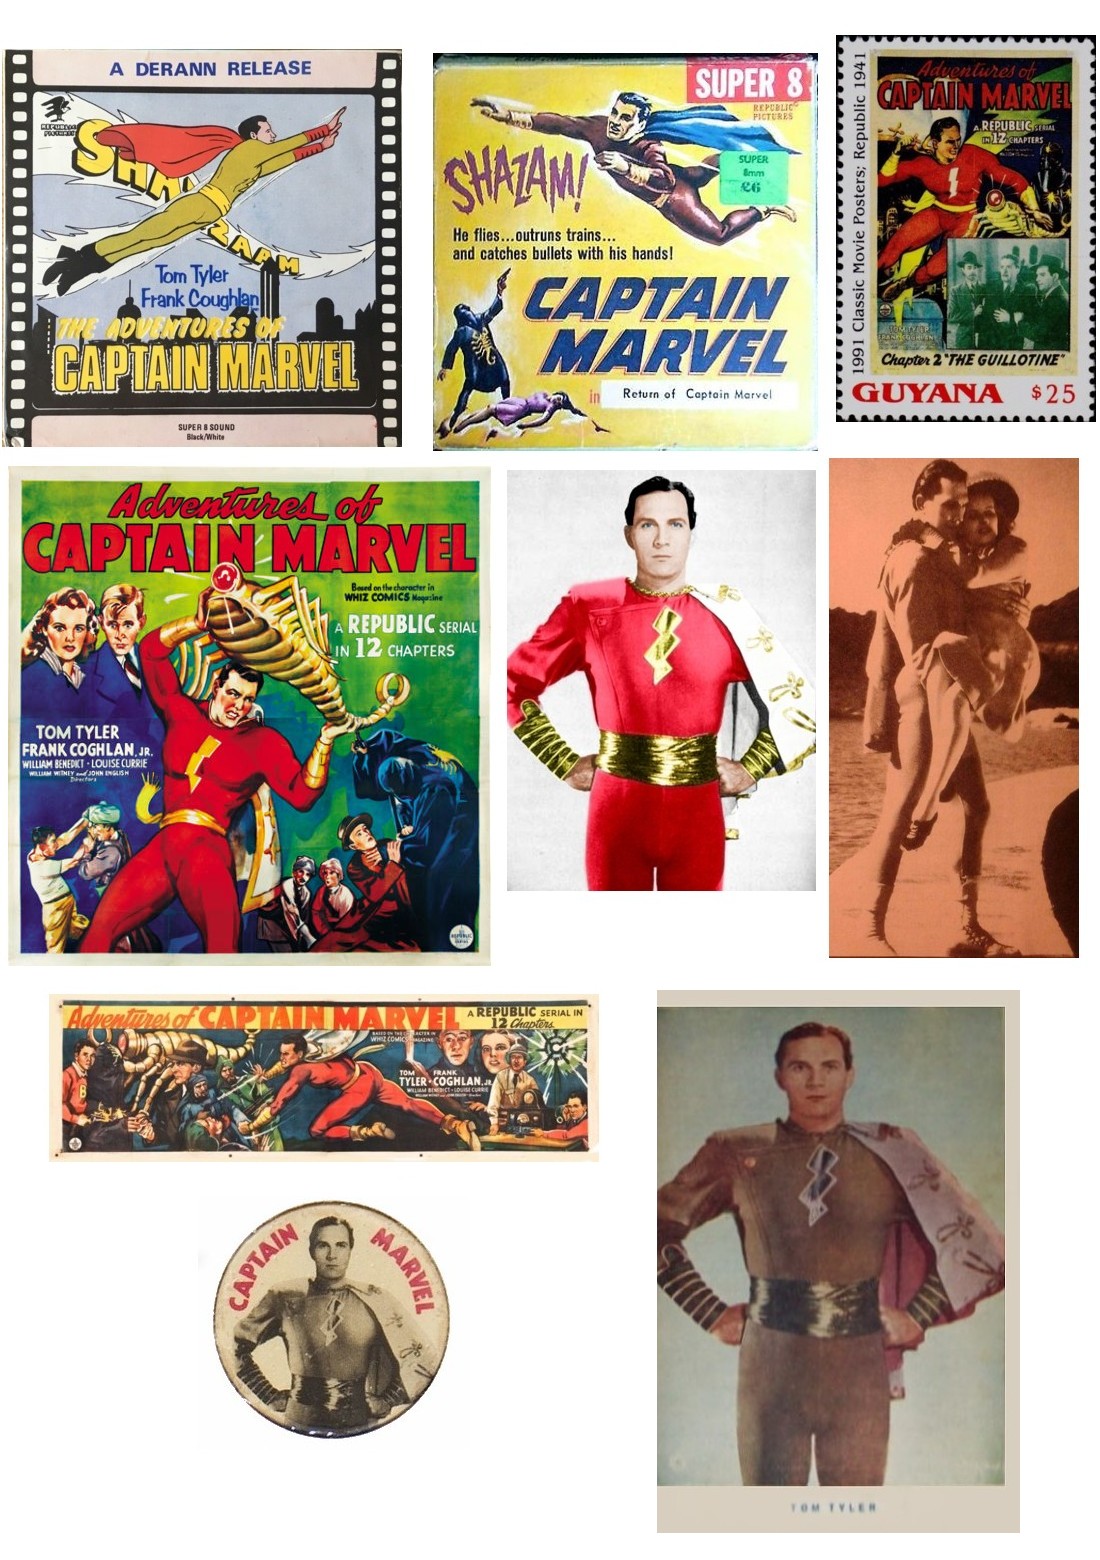 Adventures of Captain Marvel Super8, Guyana stamp, button, six sheet poster, banner